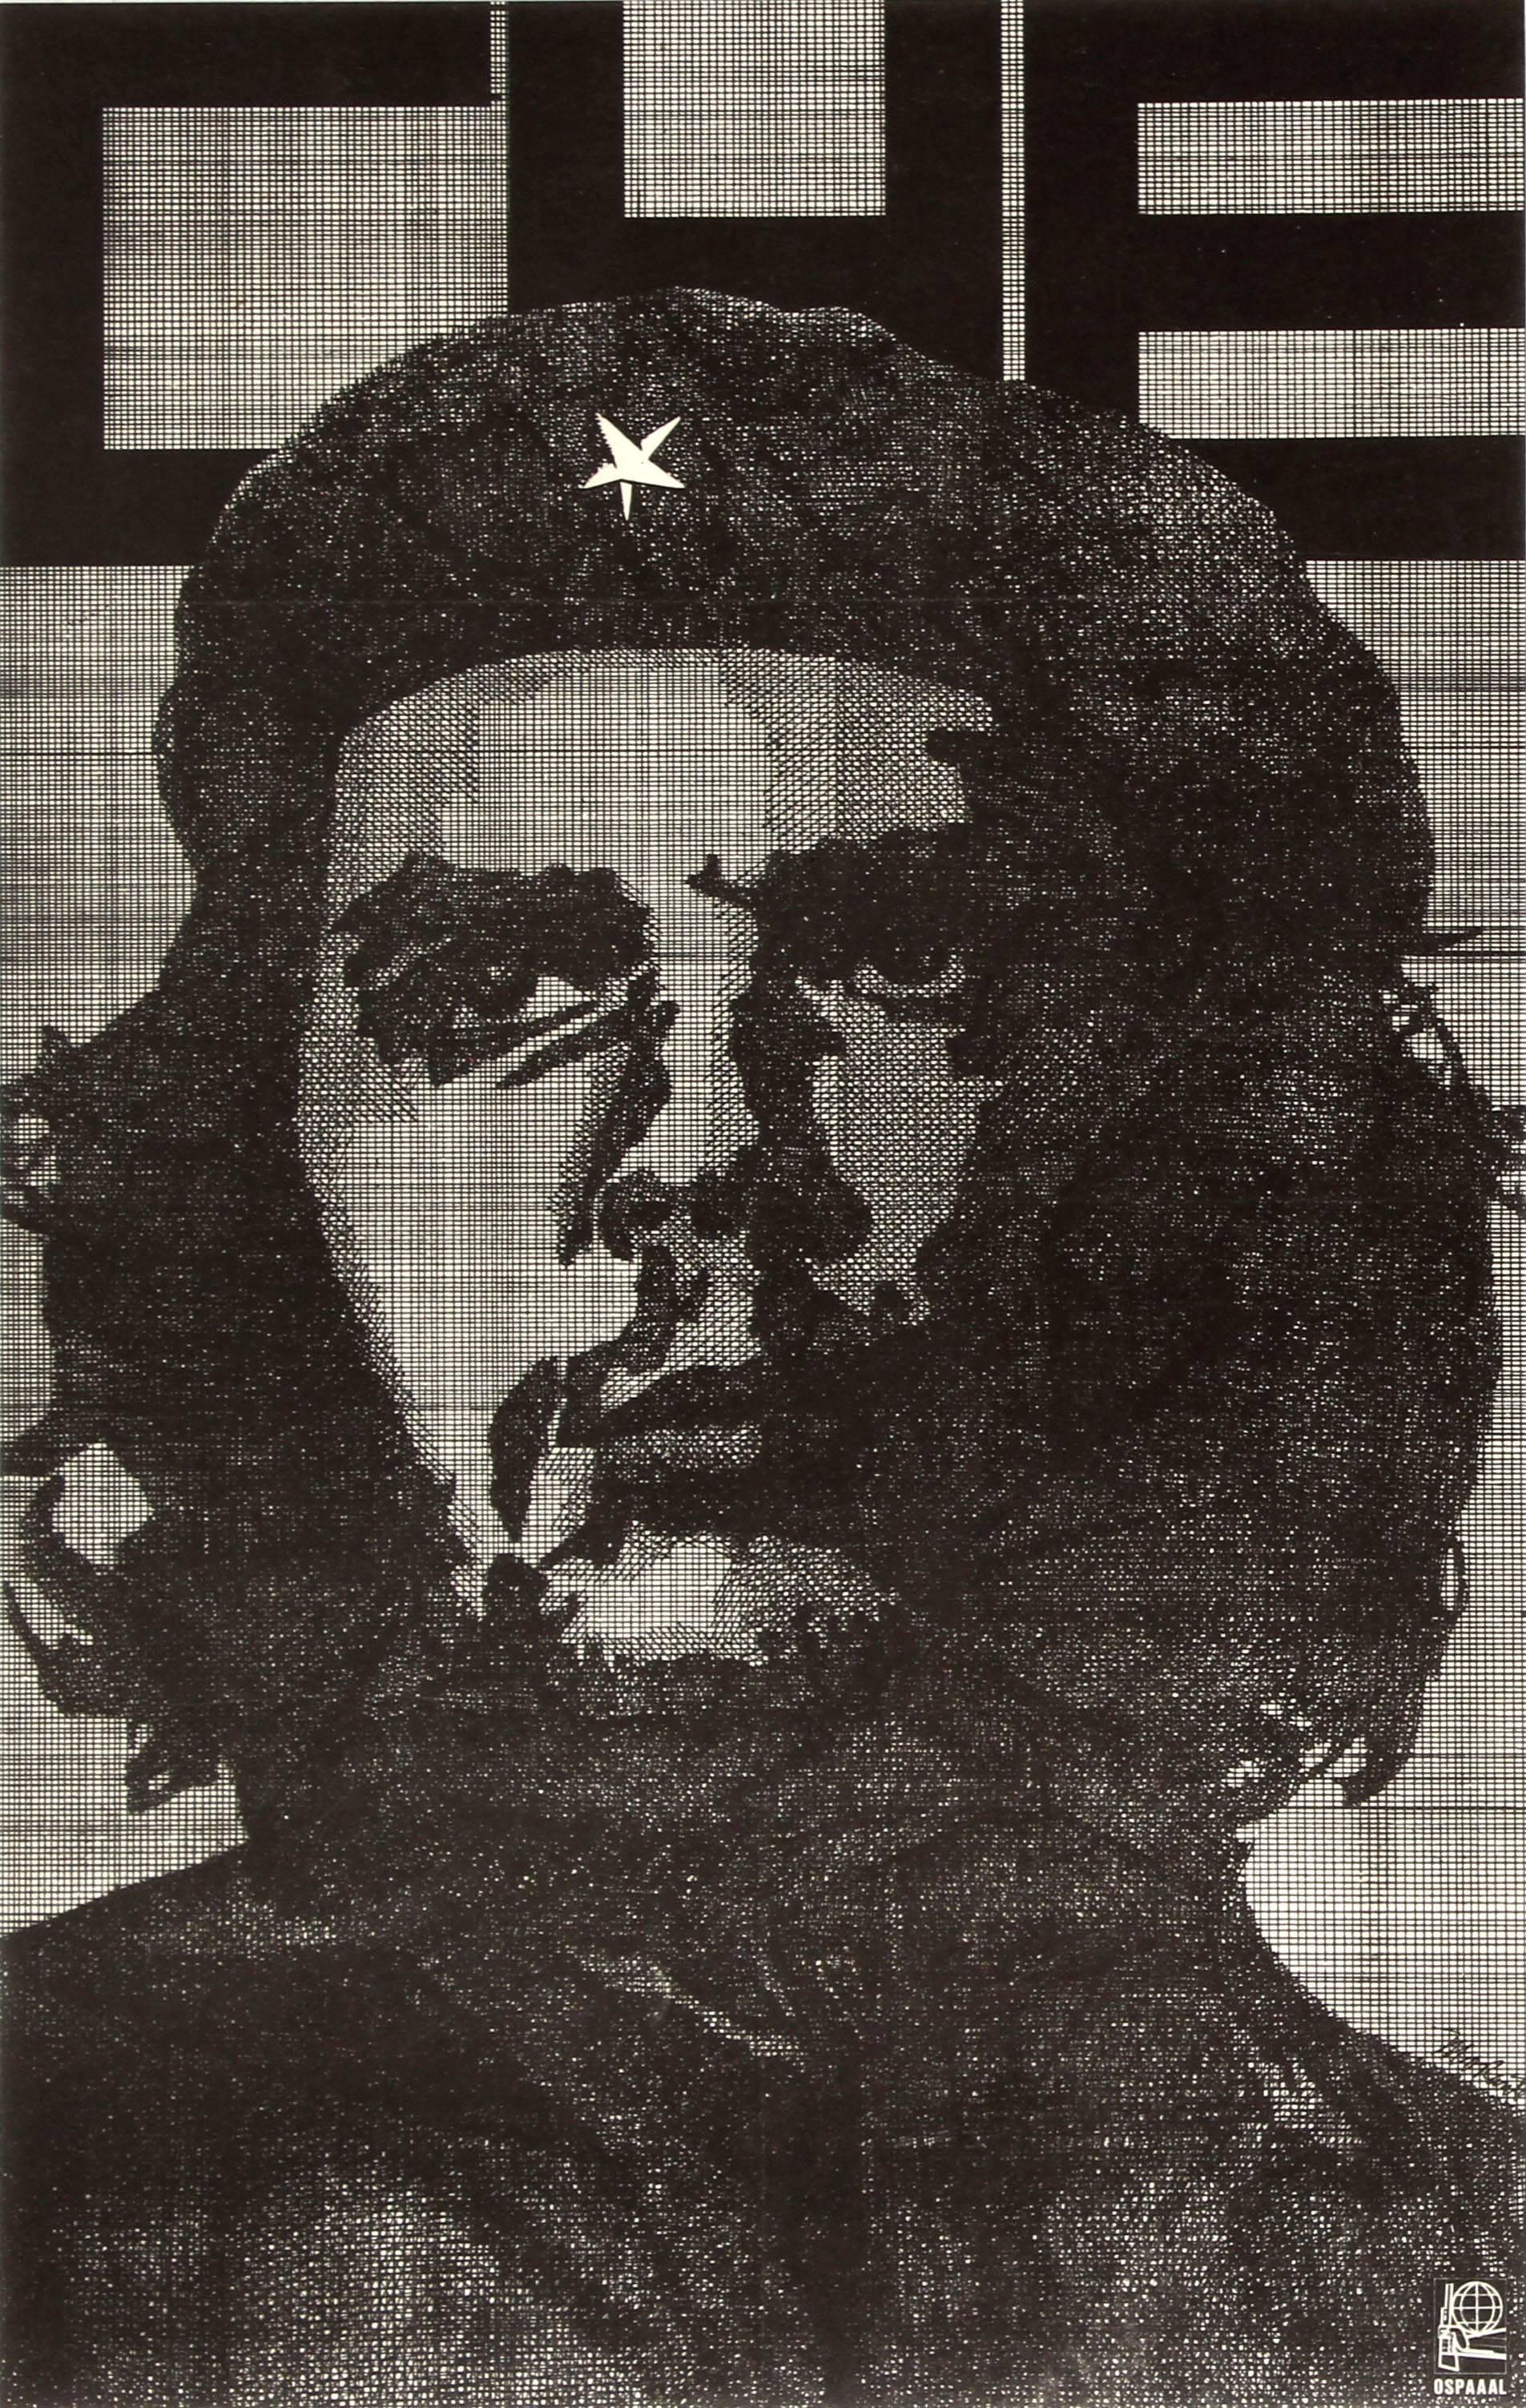 Rafael Morante Boyerizo Print - Original Vintage OSPAAAL Cuba Revolution Propaganda Poster Featuring Che Guevara